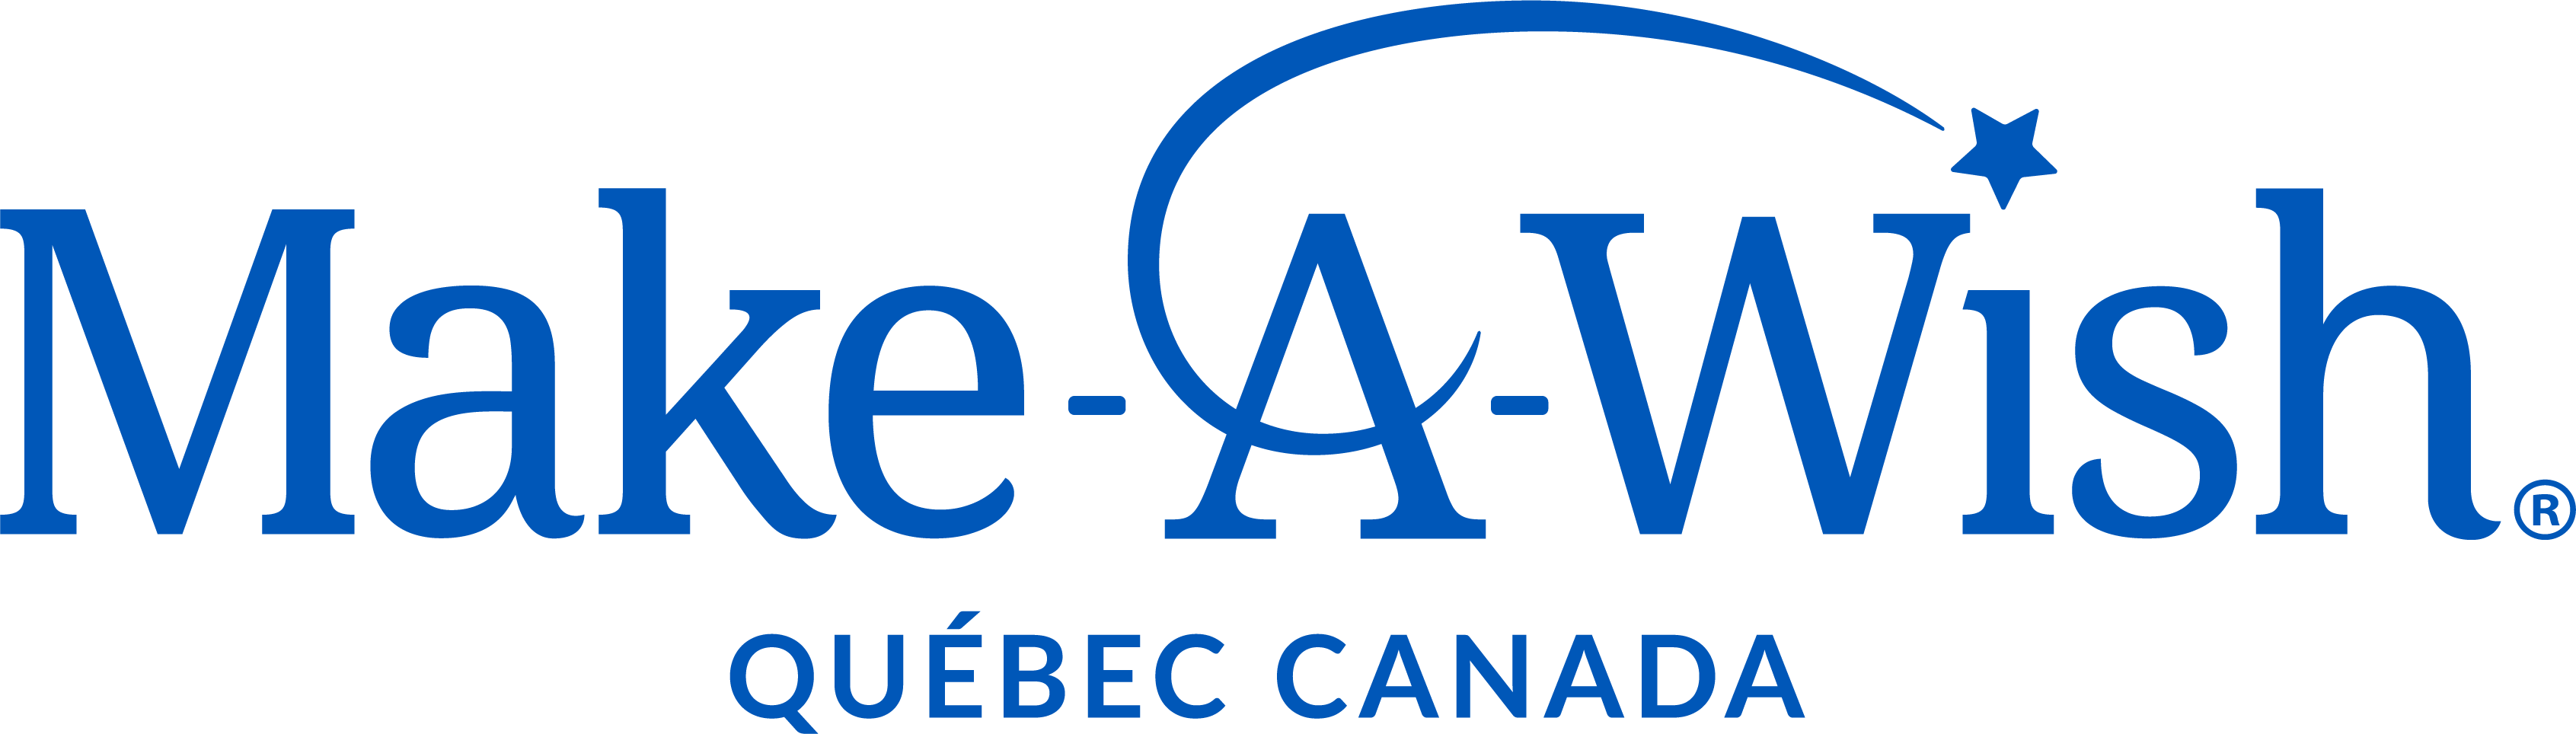 Make-A-Wish Quebec Logo.png